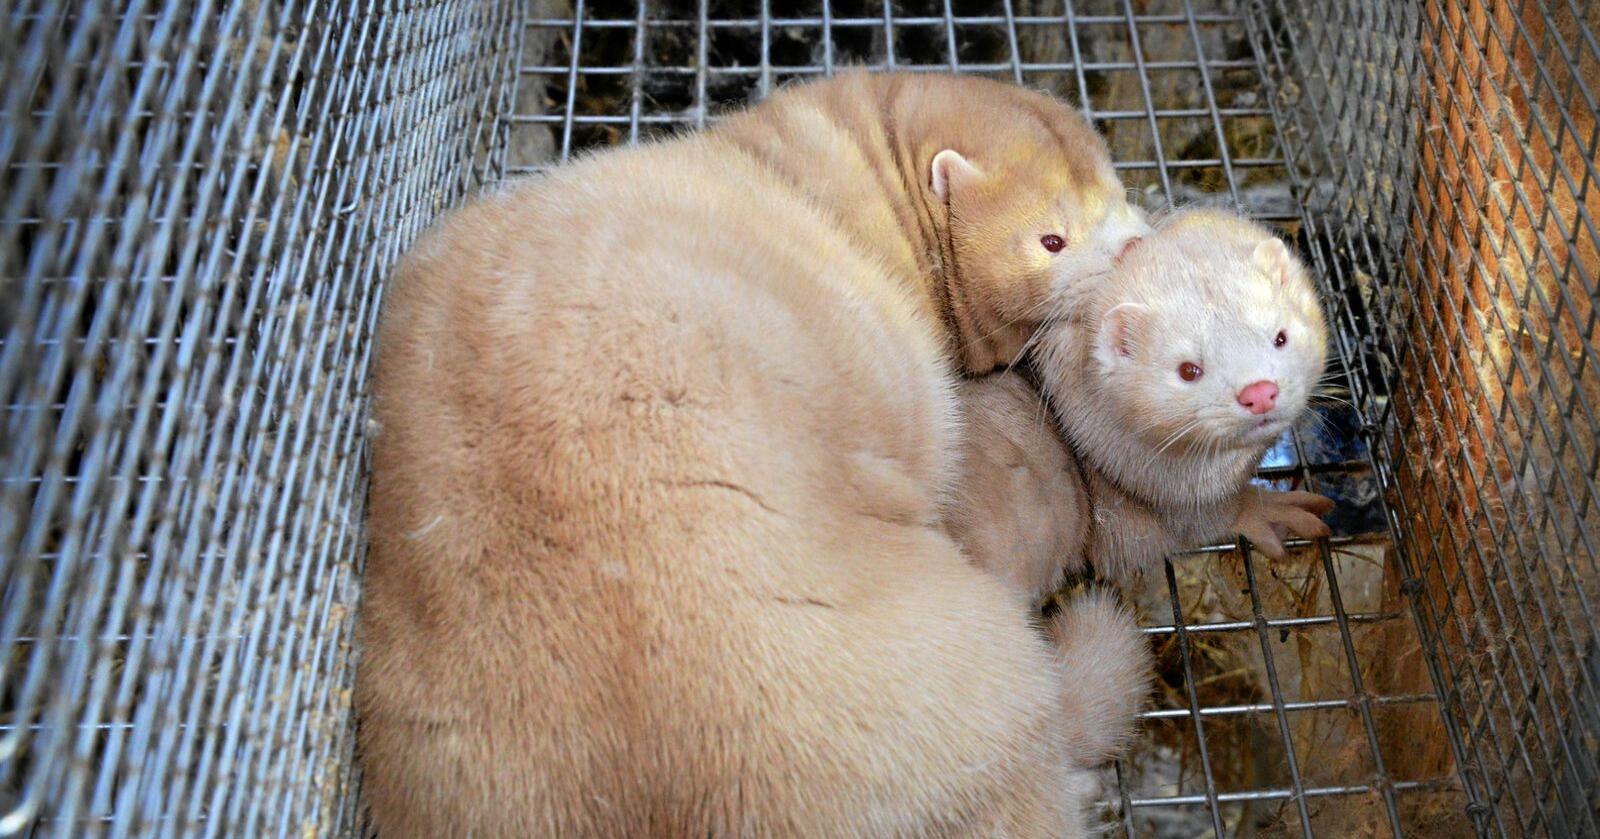 Undersøkelser tyder på at mink kan bli smittet av korona. Foto: Siri Juell Rasmussen